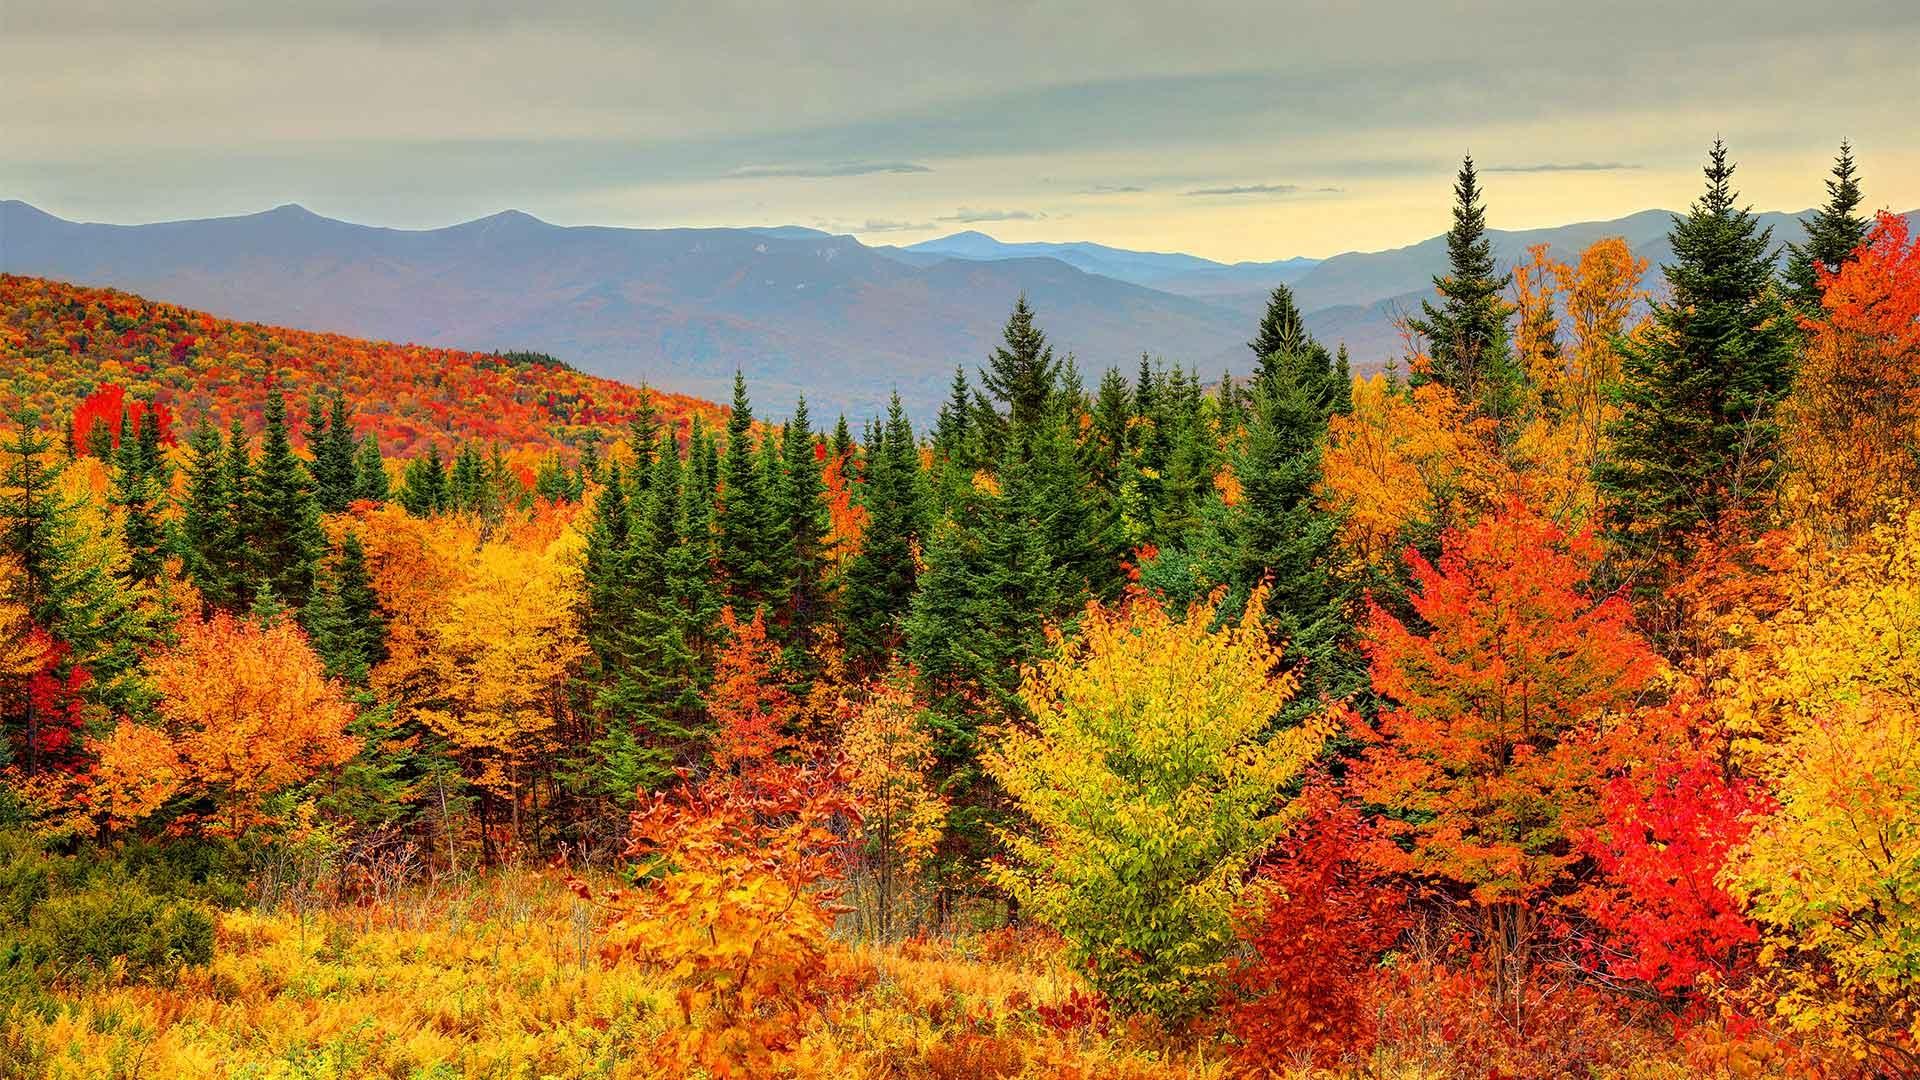 Peak fall foliage in New Hampshire's White Mountains.